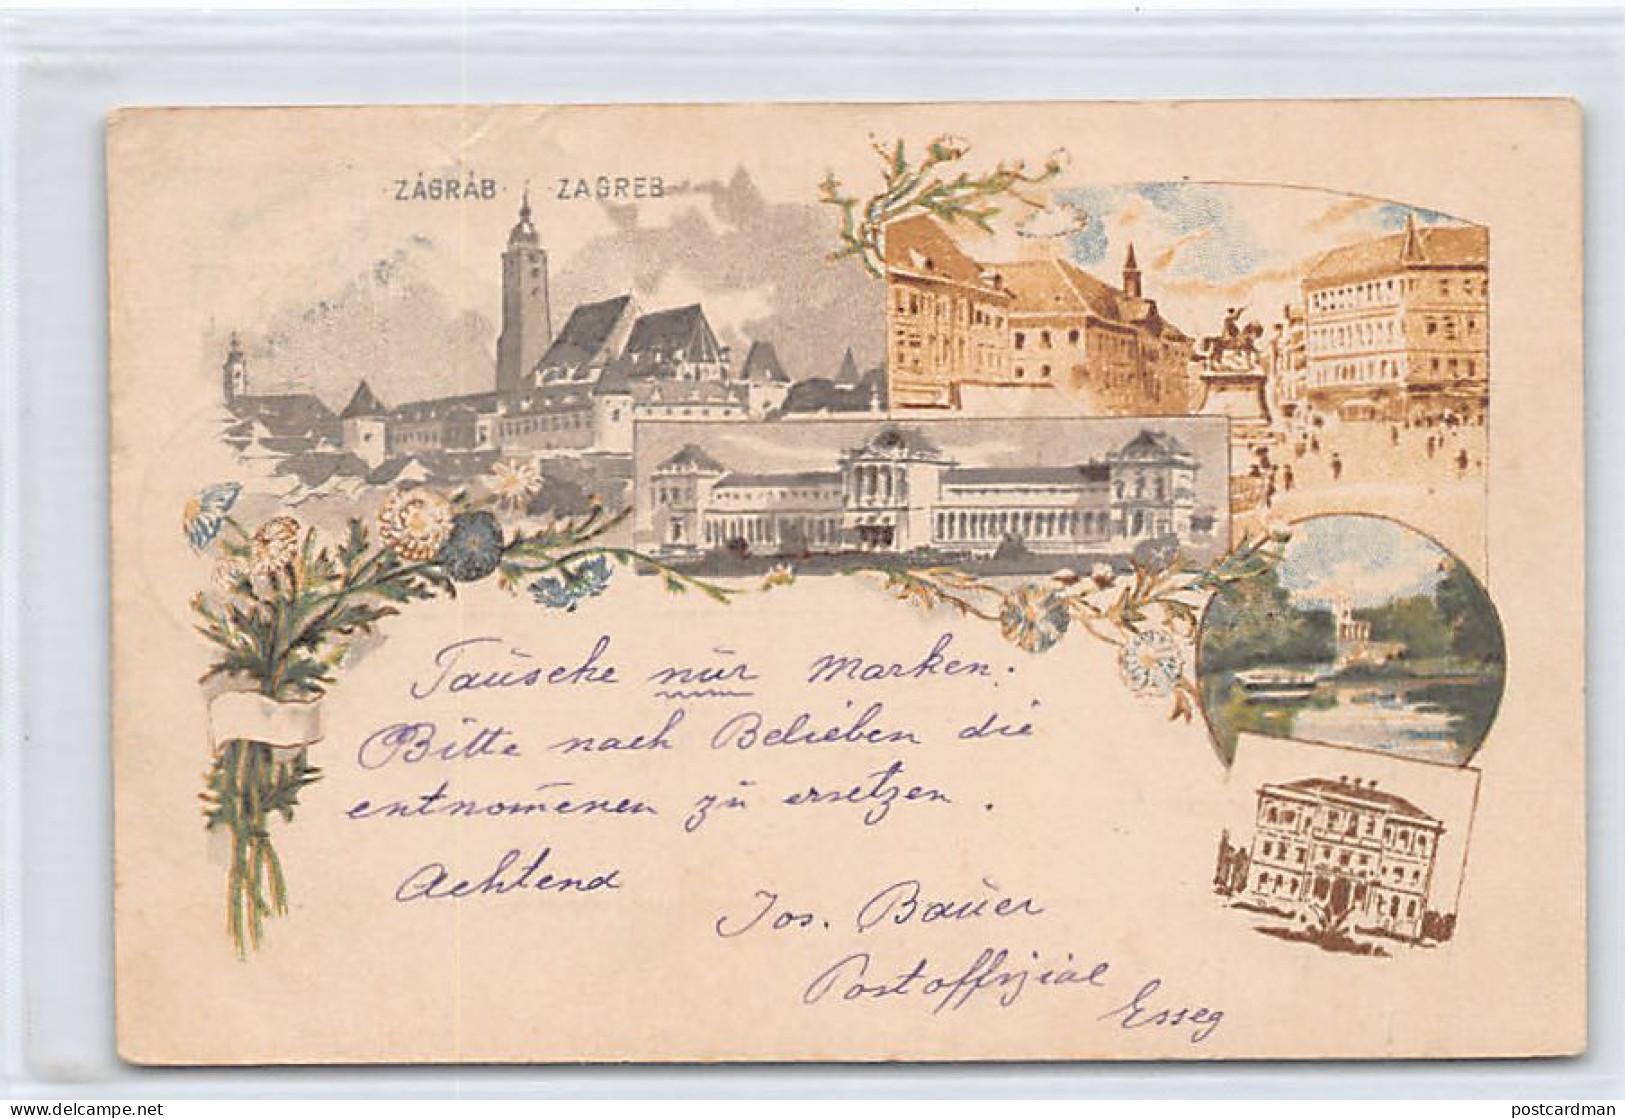 Croatia - ZAGREB - Litho - Year 1900 - Publ. Stamped Postcard (Austro-Hungarian Post)  - Croatia